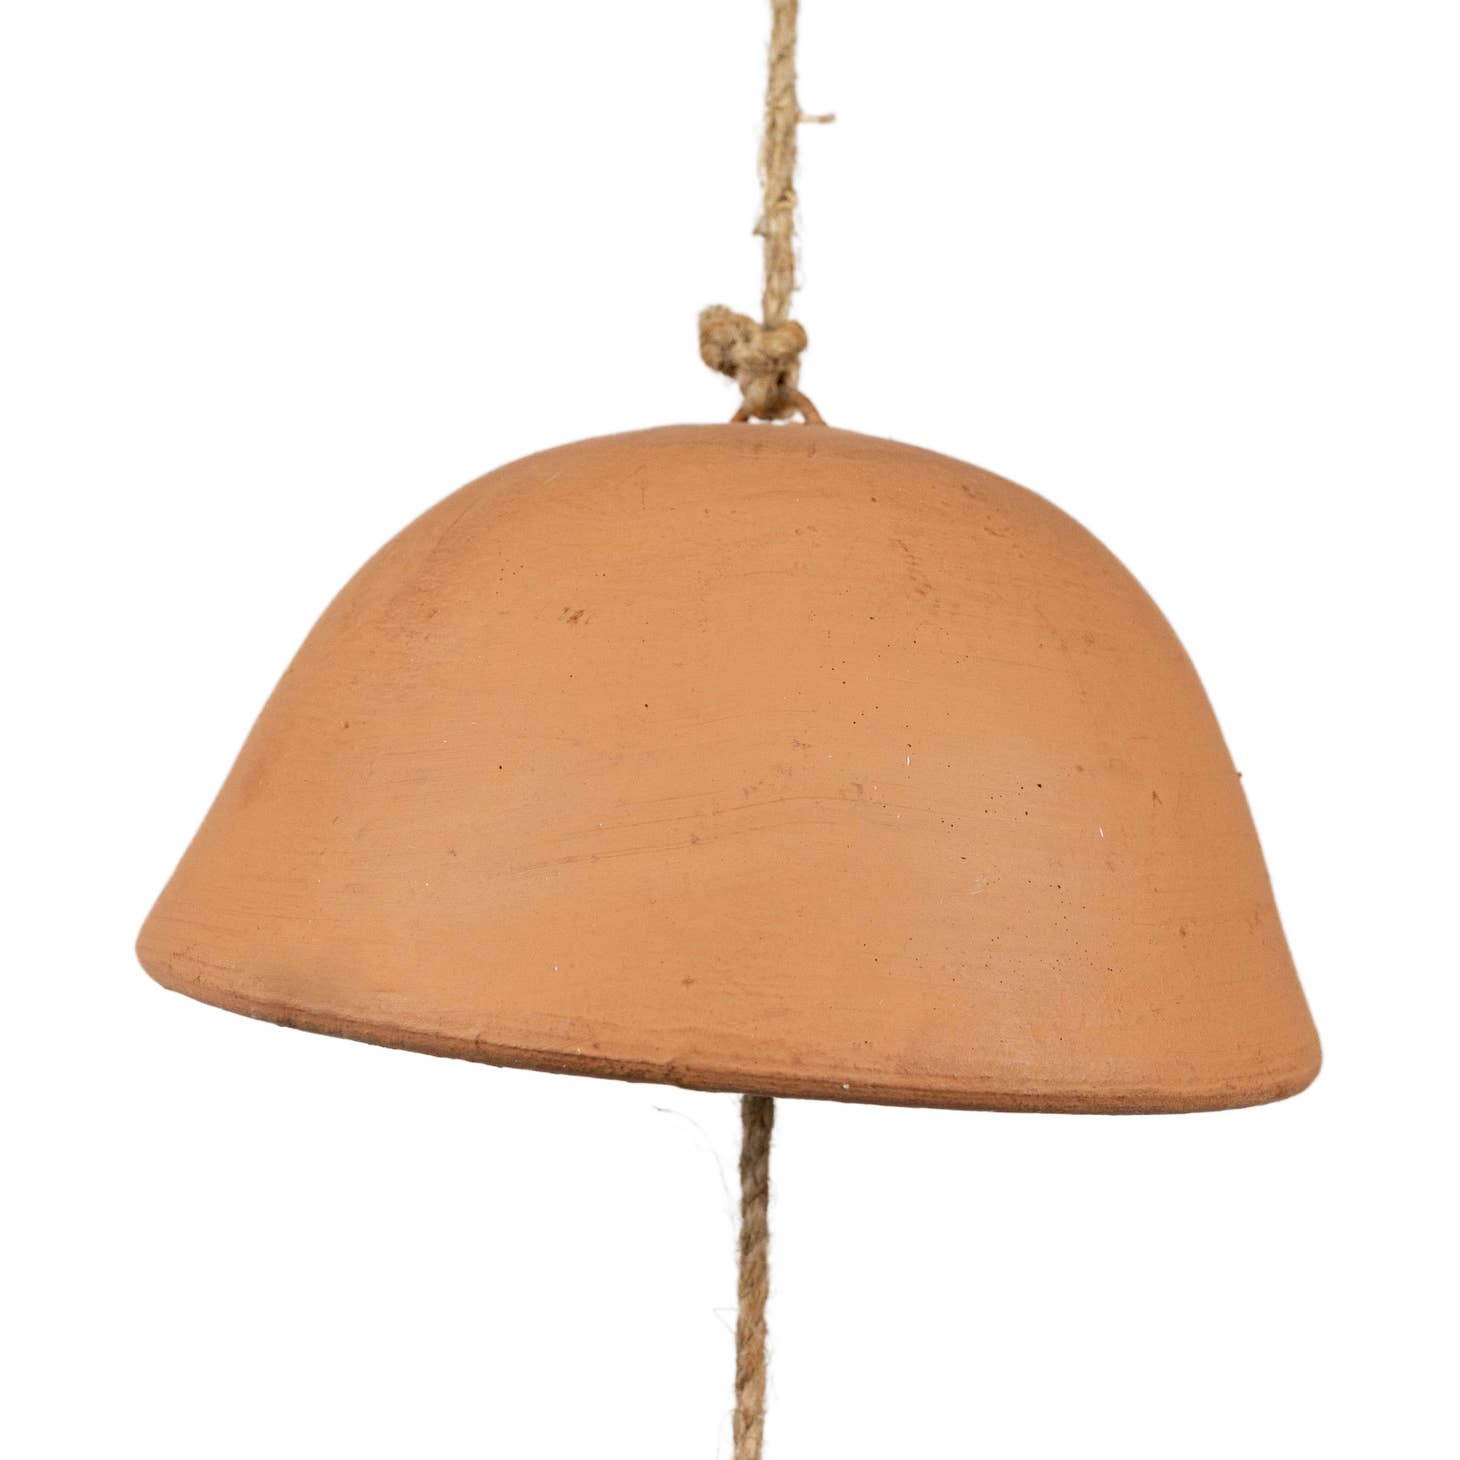 Rambla Tiered Terracotta Bell